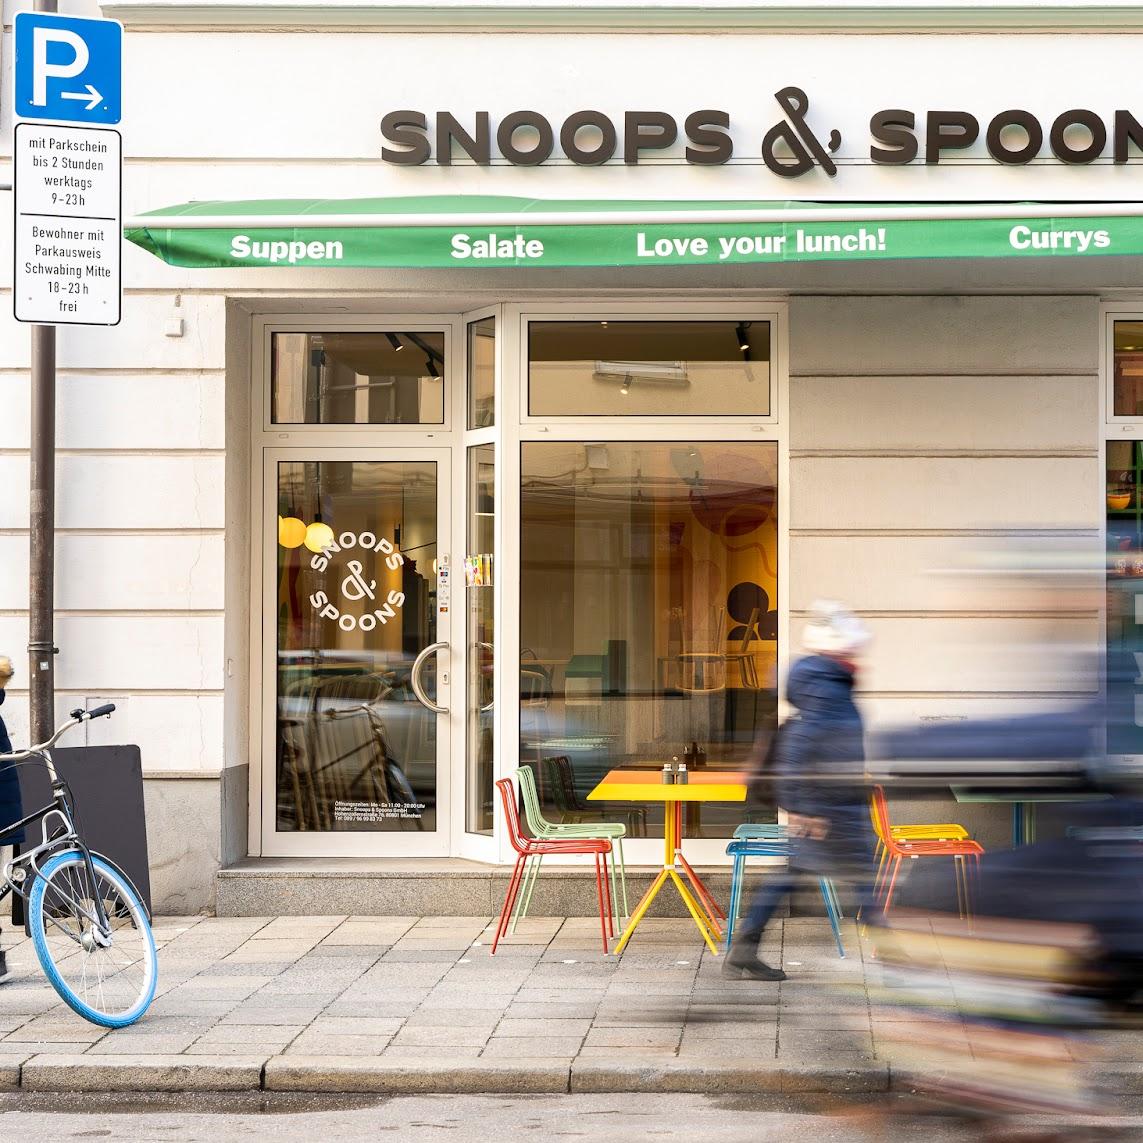 Restaurant "Snoops & Spoons Love your Lunch!" in München